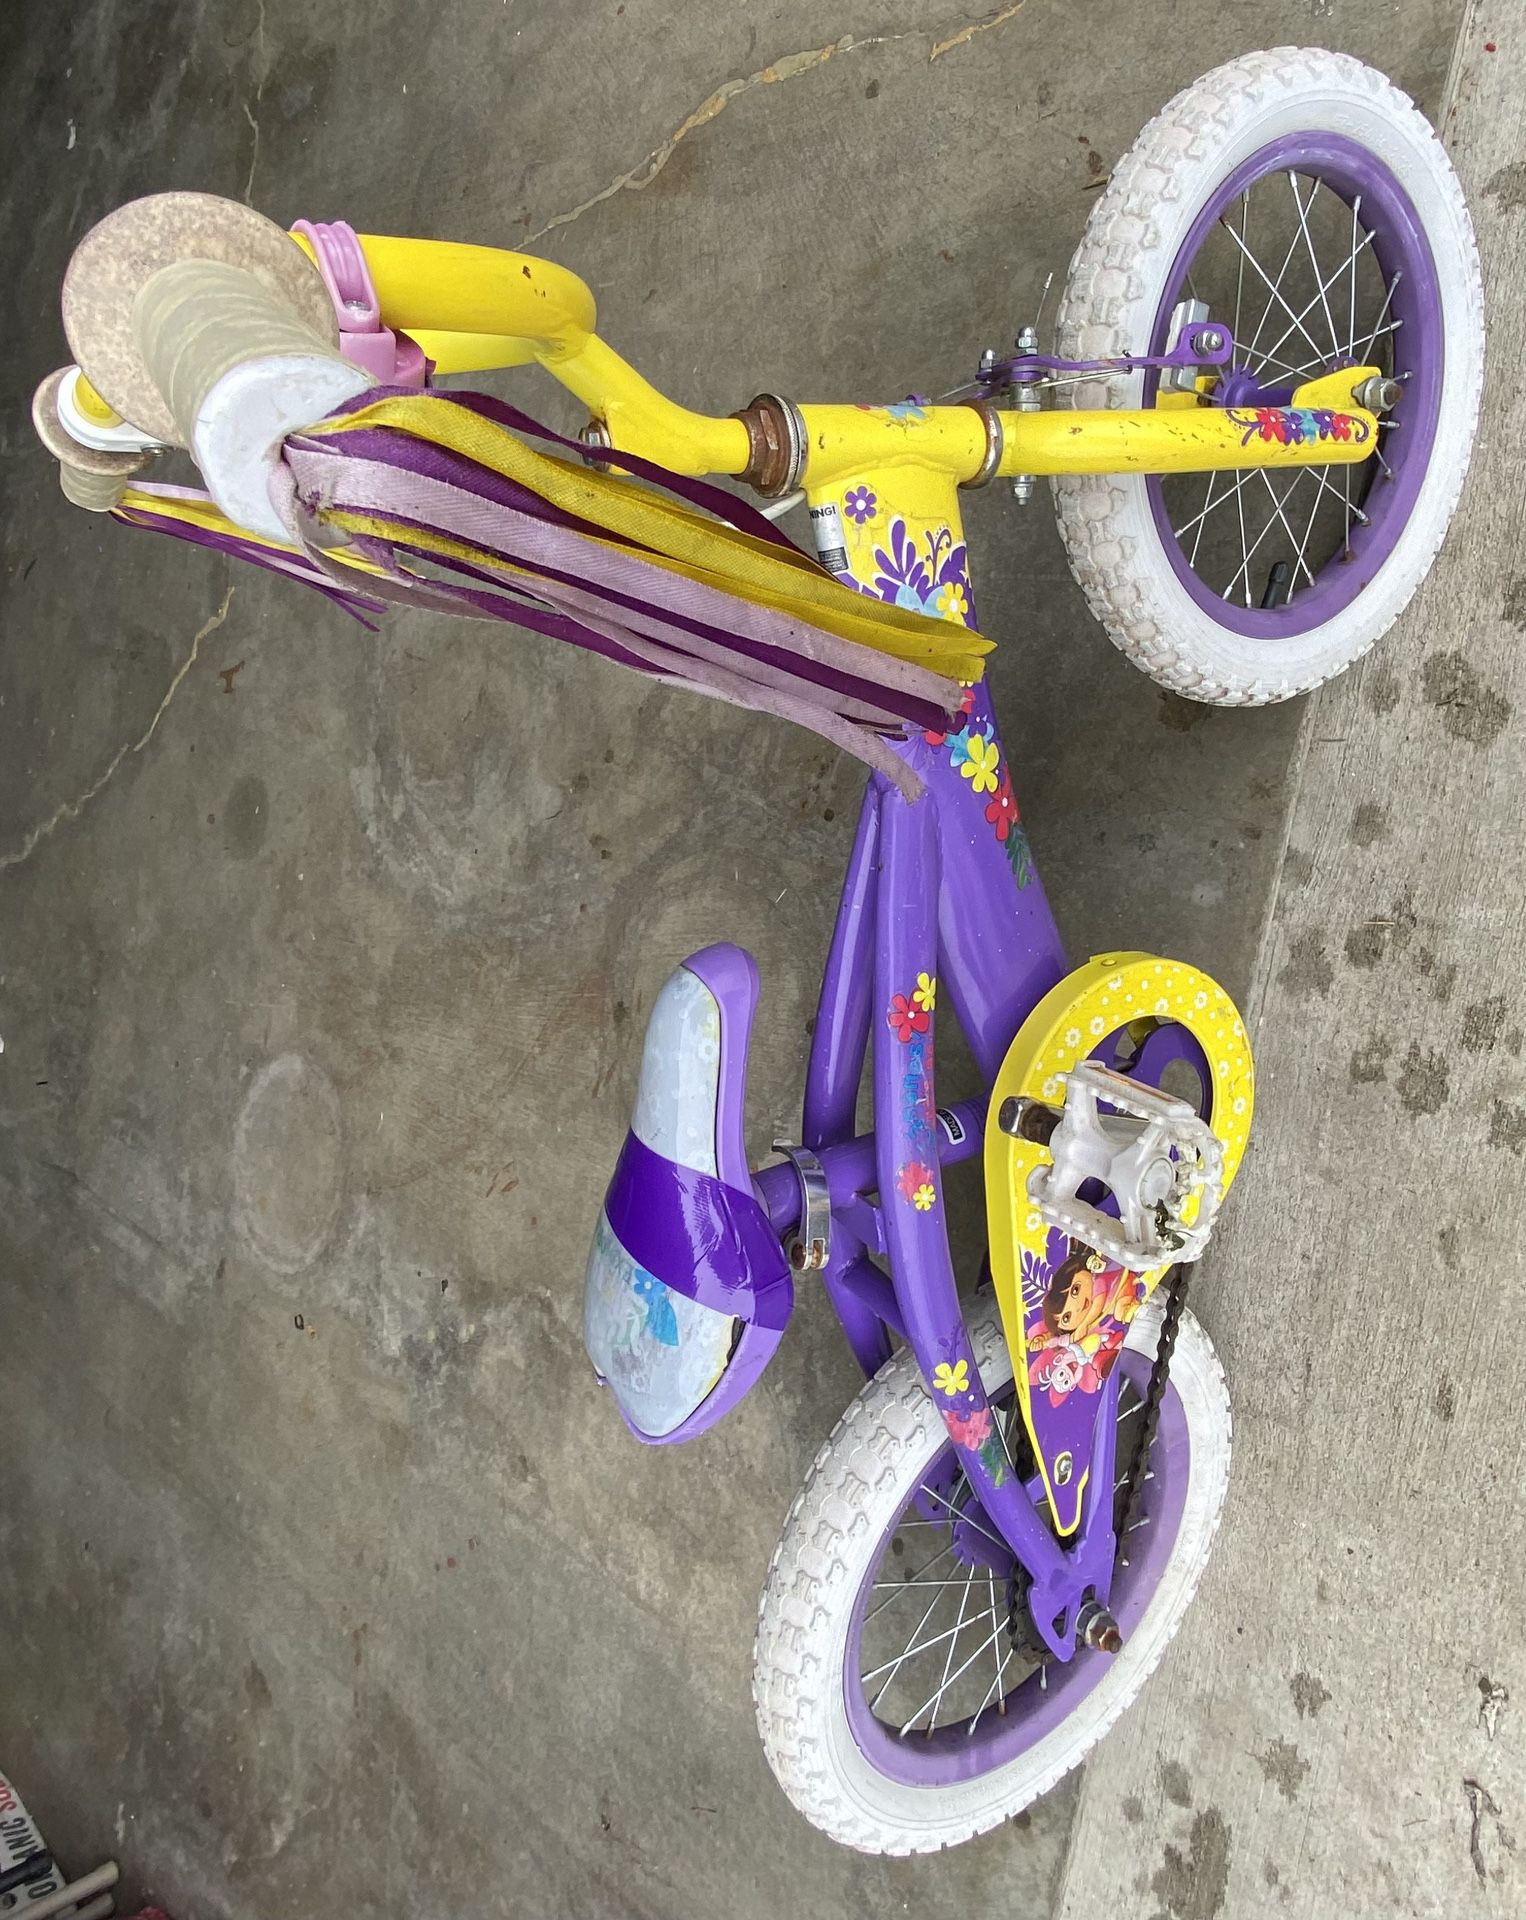 Bike for toddlers - 14" wheels